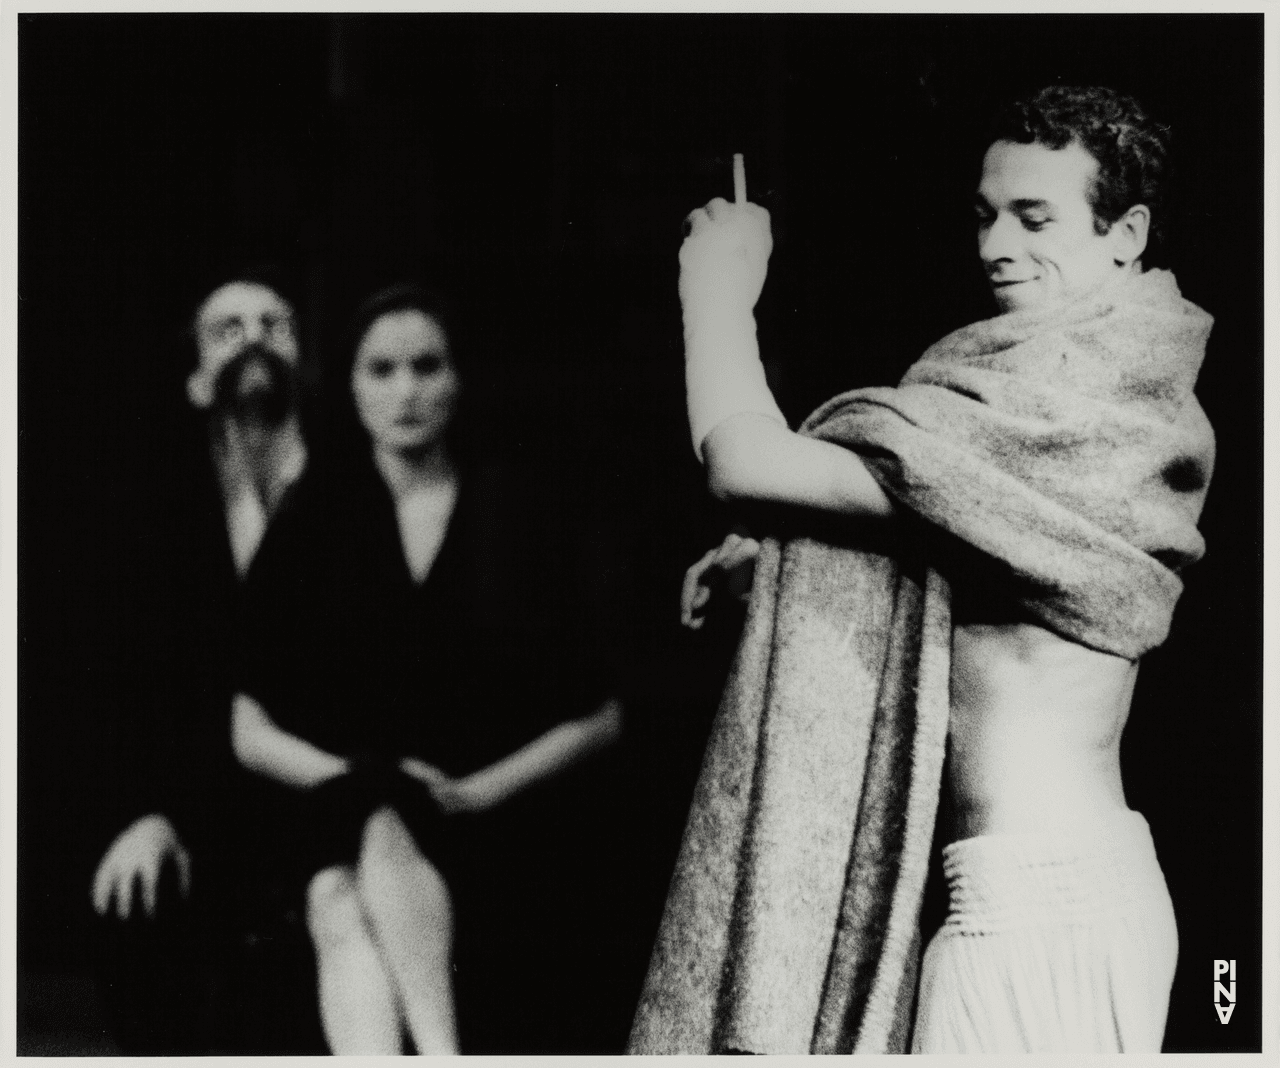 Geraldo Si Loureiro, Julie Anne Stanzak and Antonio Carallo in “Viktor” by Pina Bausch at Teatro La Fenice Venedig, May 5, 1992